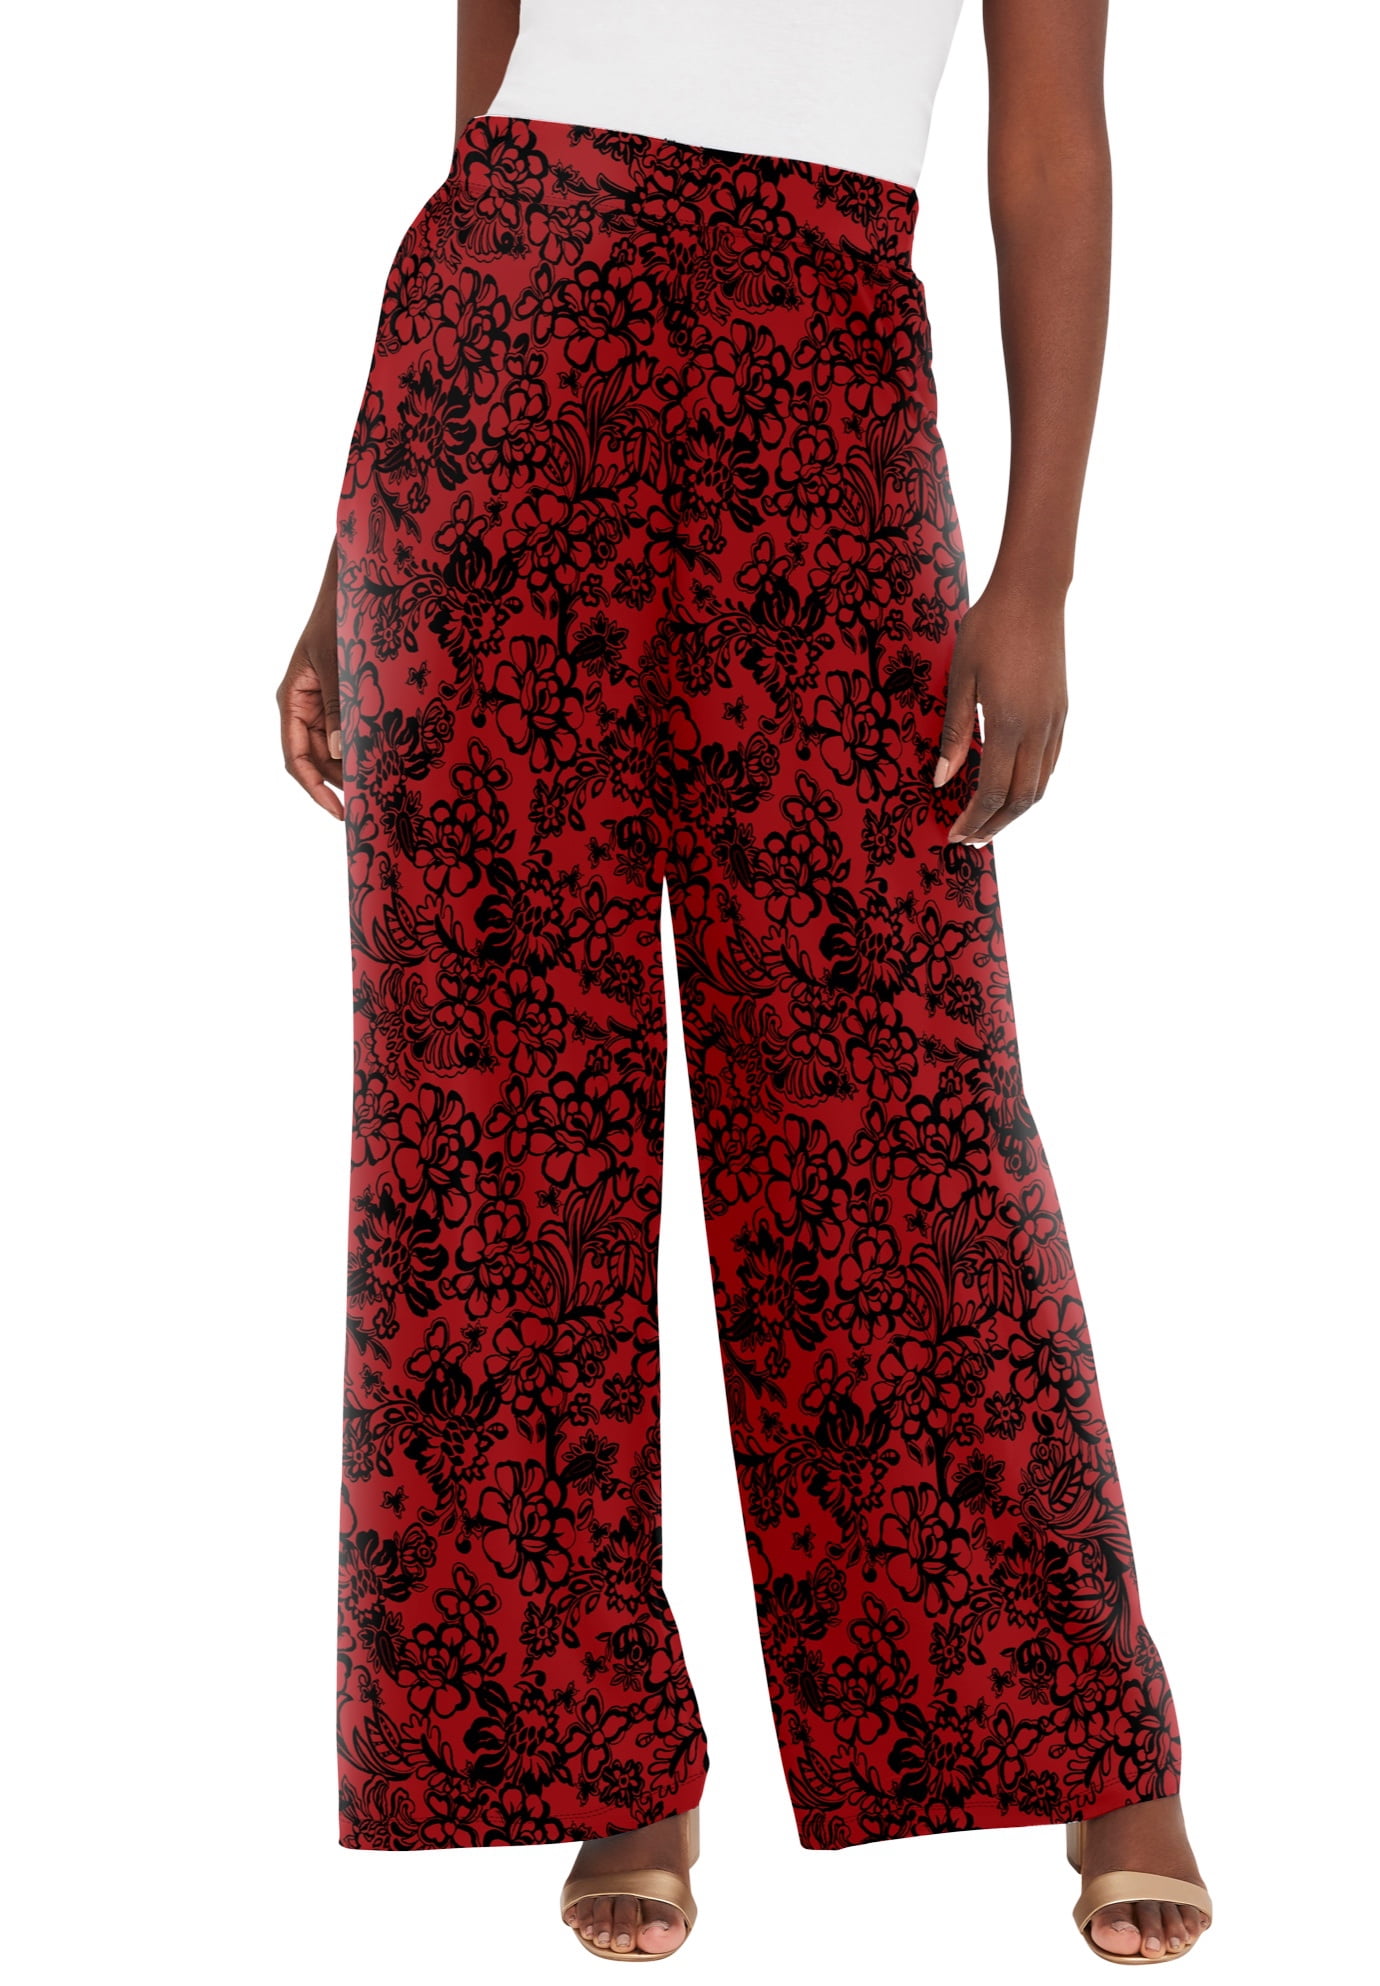 Jessica London Women's Plus Size Knit Palazzo Pant Wide Leg Stretch Dress  Pants - 30/32, Classic Red Flower 